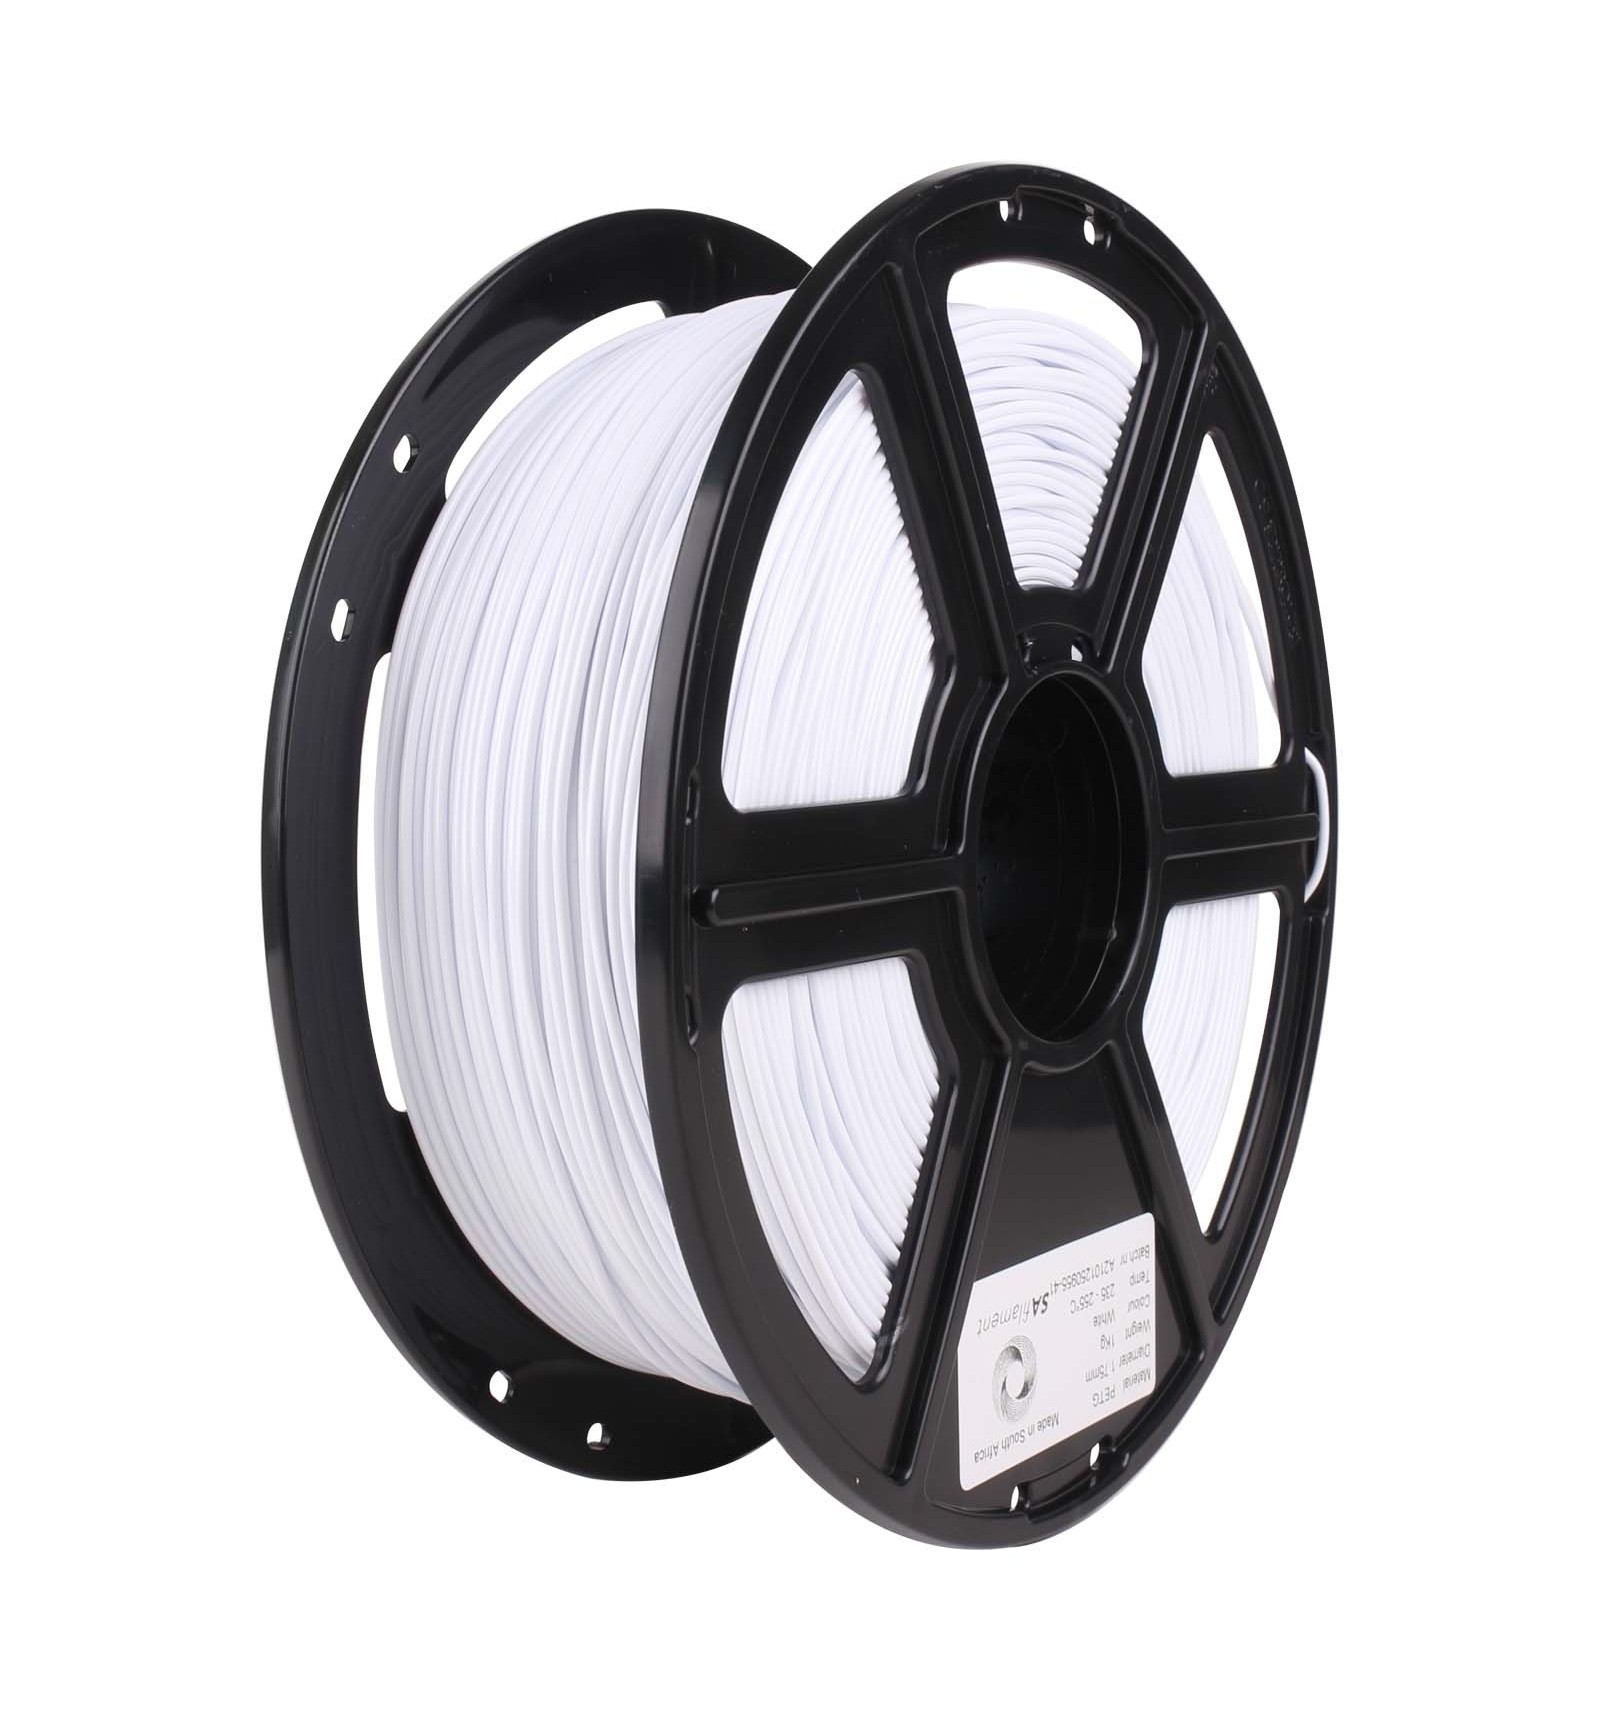 https://www.diyelectronics.co.za/store/12825-thickbox_default/sa-filament-petg-filament-175mm-1kg-white.jpg